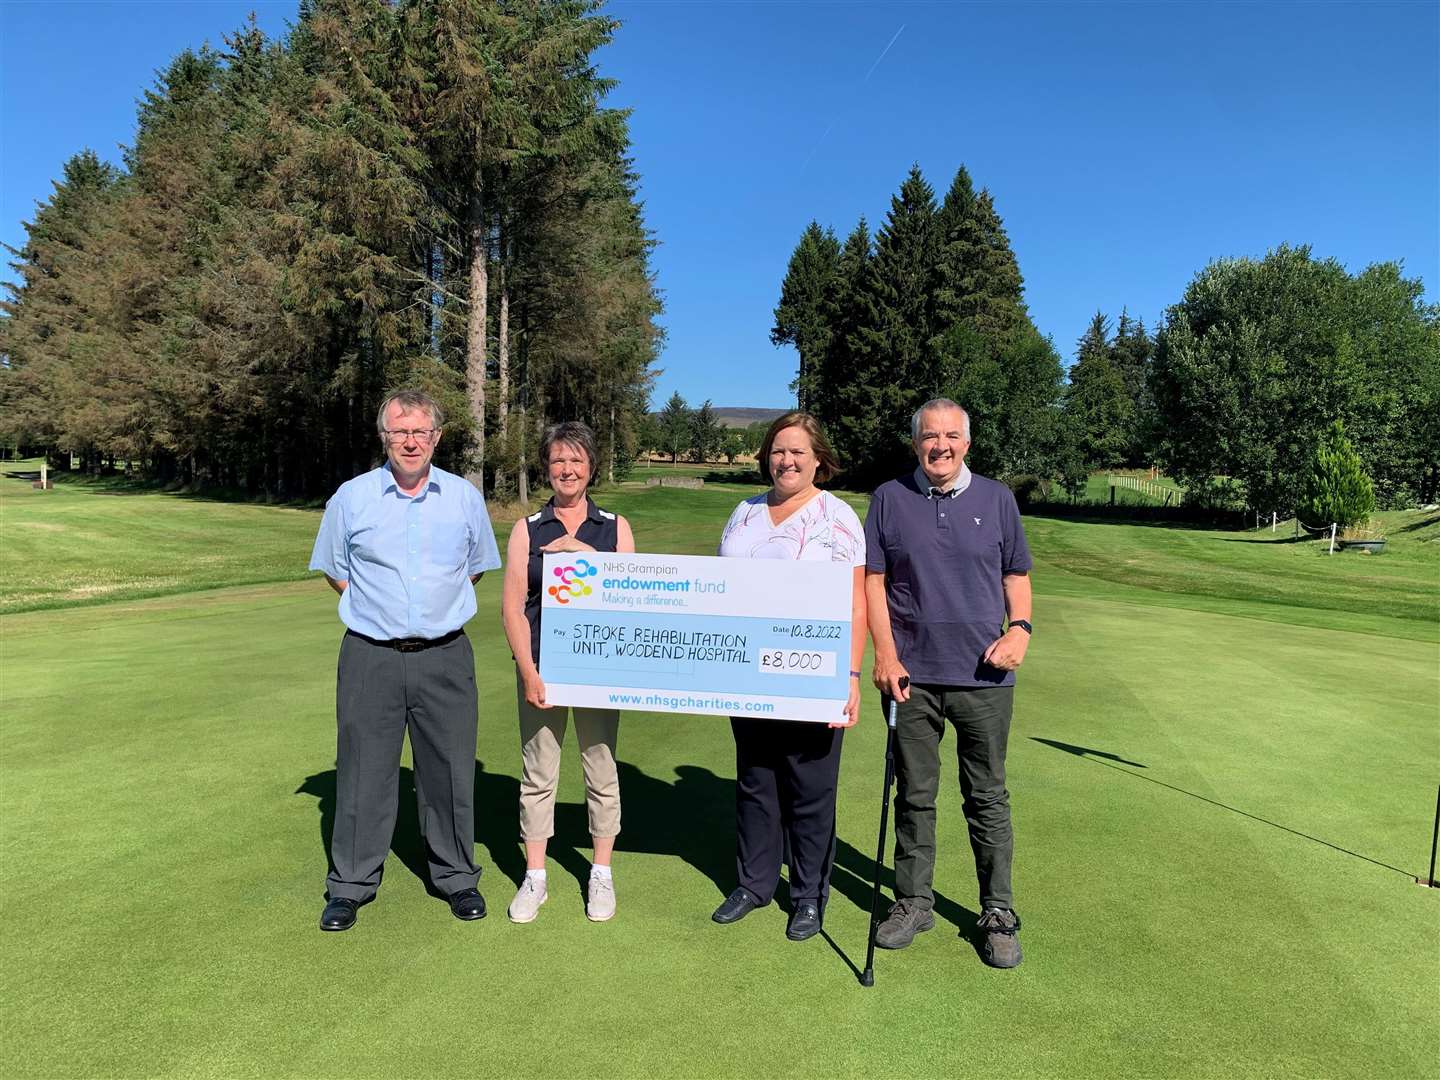 Insch Golf Club members Alan Donald, Eileen Gerrard and Robert Ingram present the donation to Therese Lebedis.